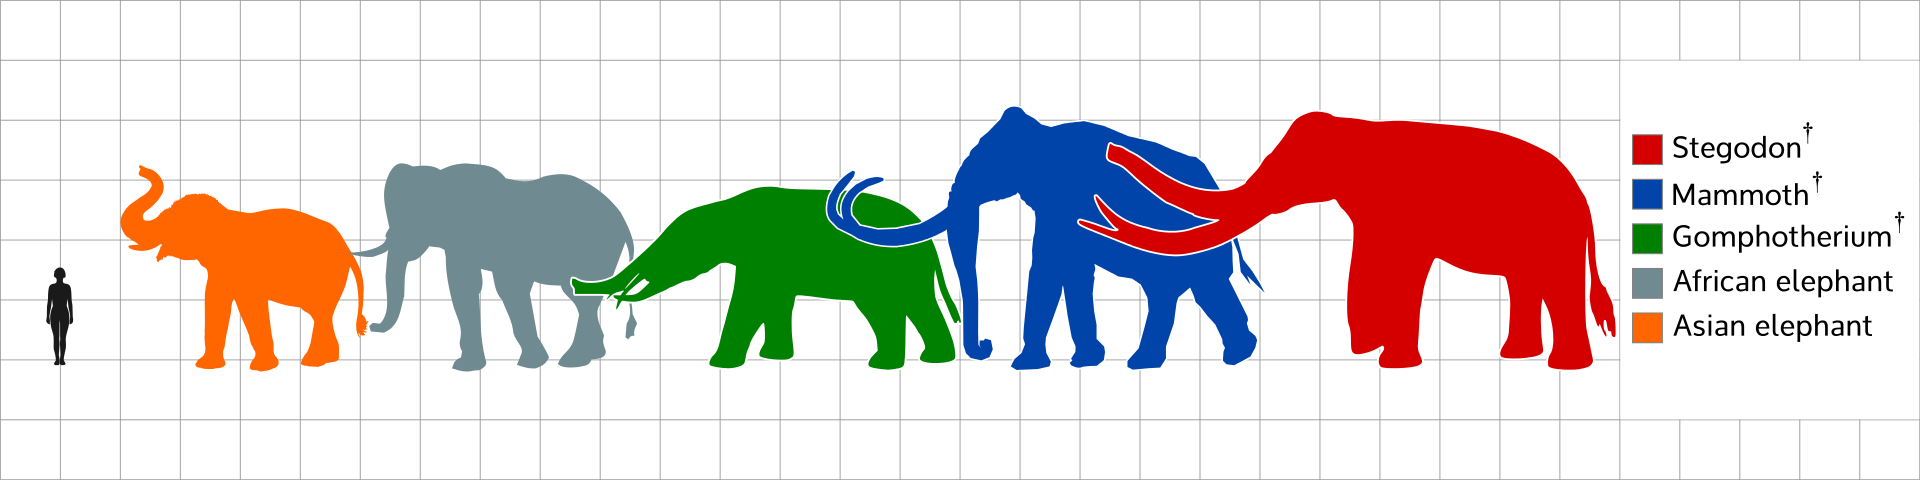 The Trunk, The Shoulder, Elephants, Quote - Stegodon Size (1920x480)